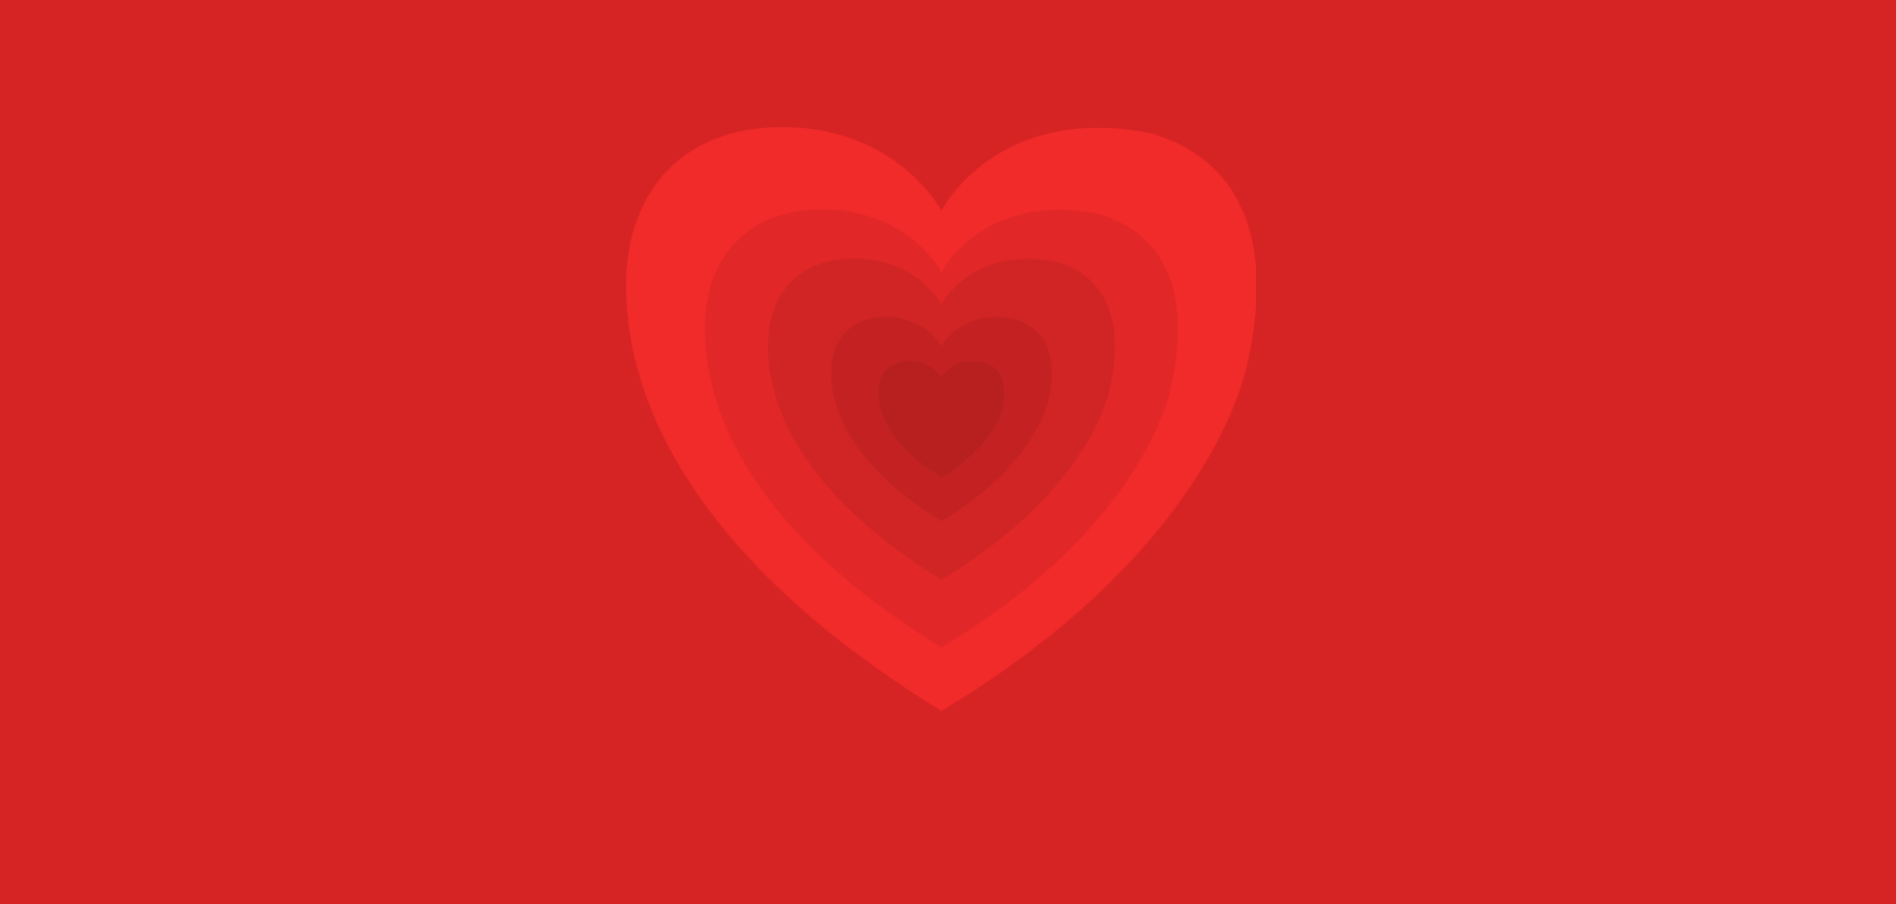 heartbeat-jquery-effect-html